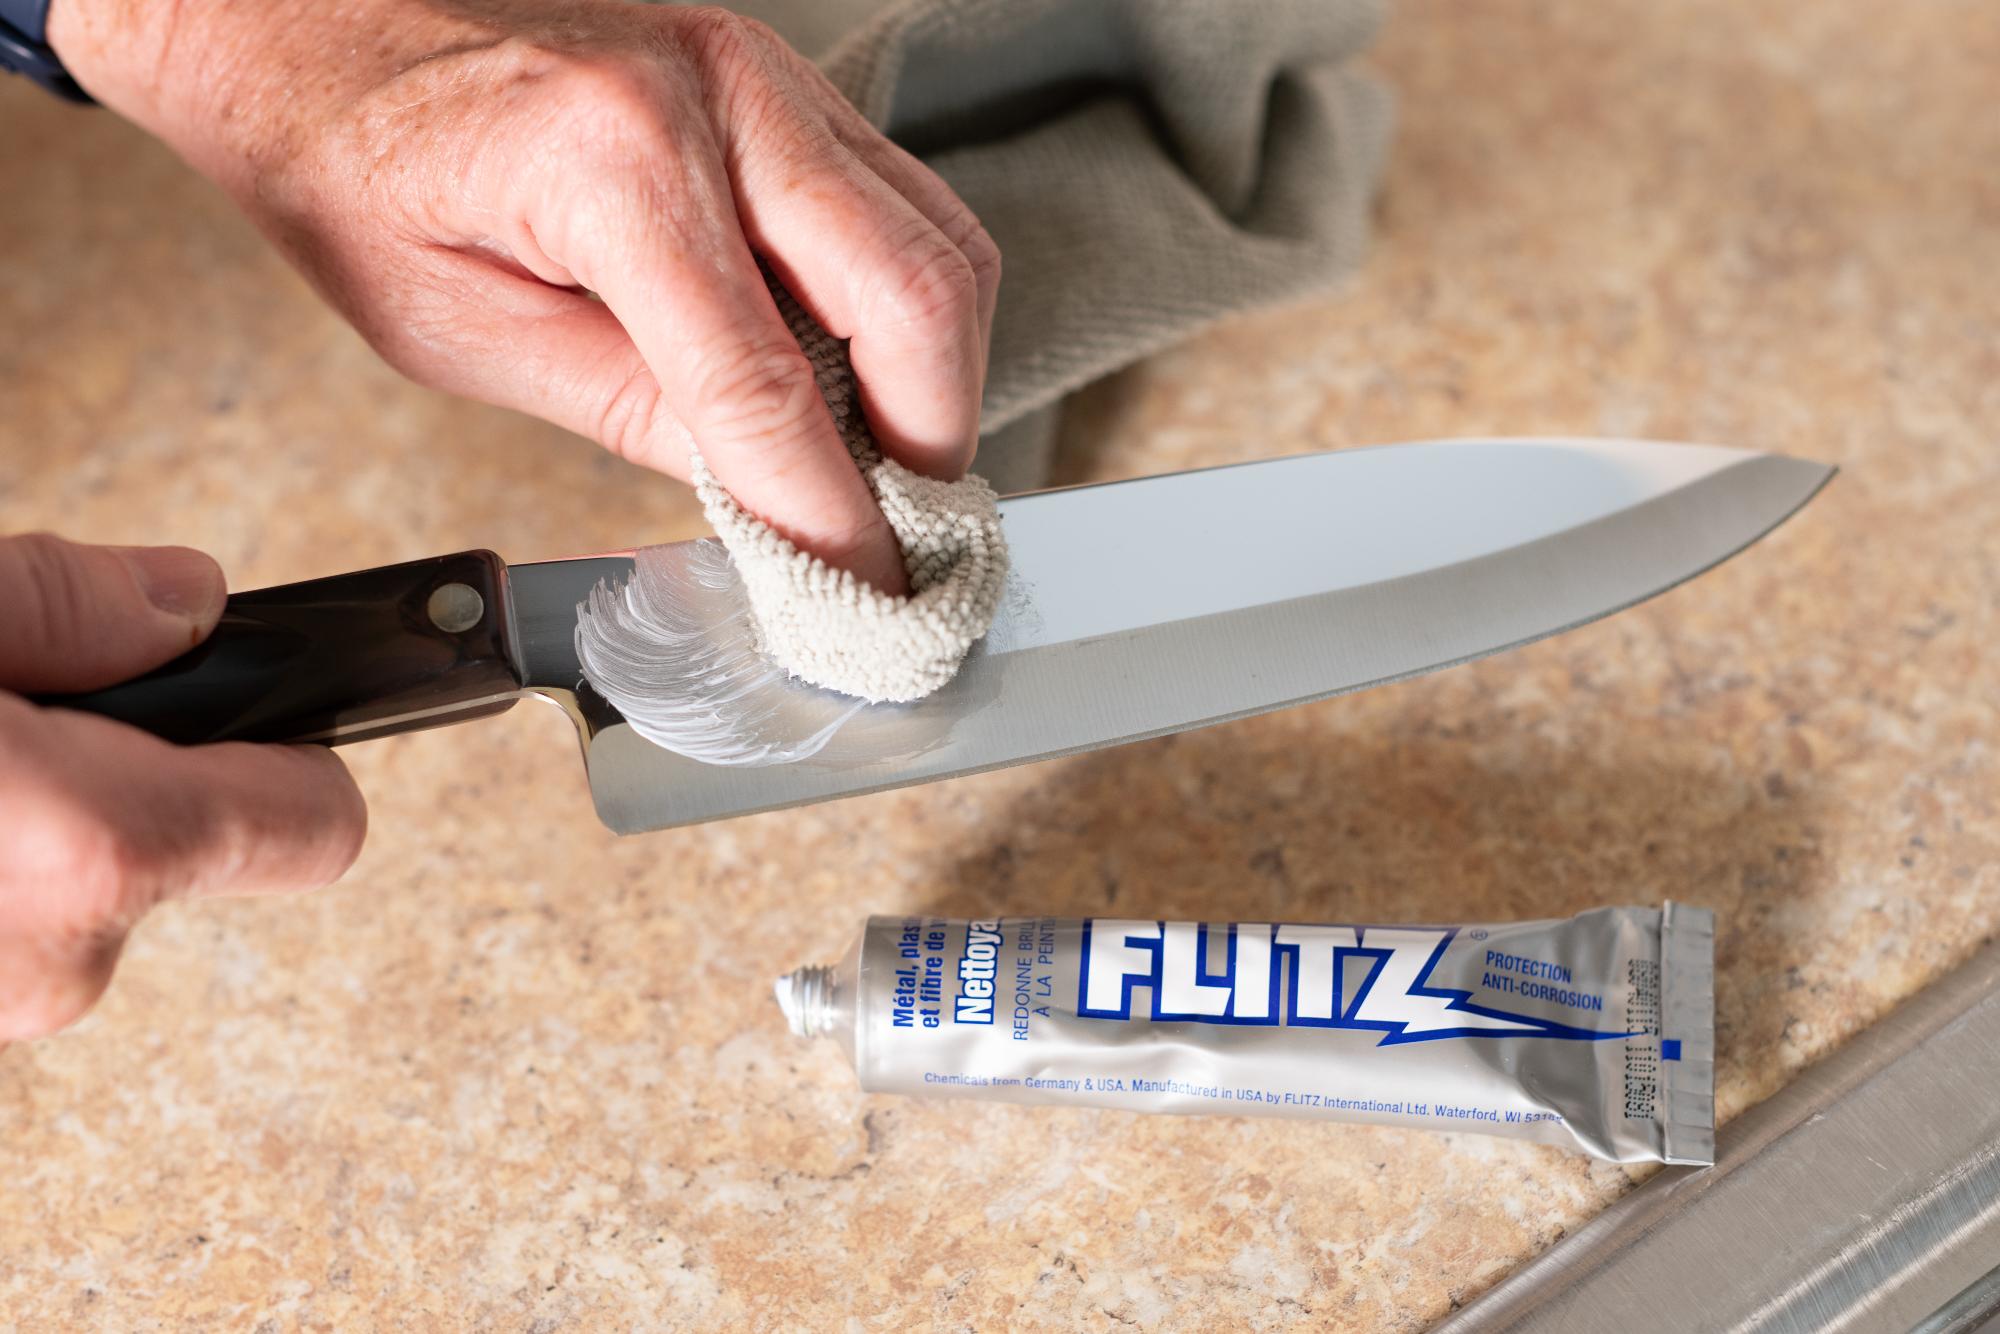 Using Flitz polisher on the blade.